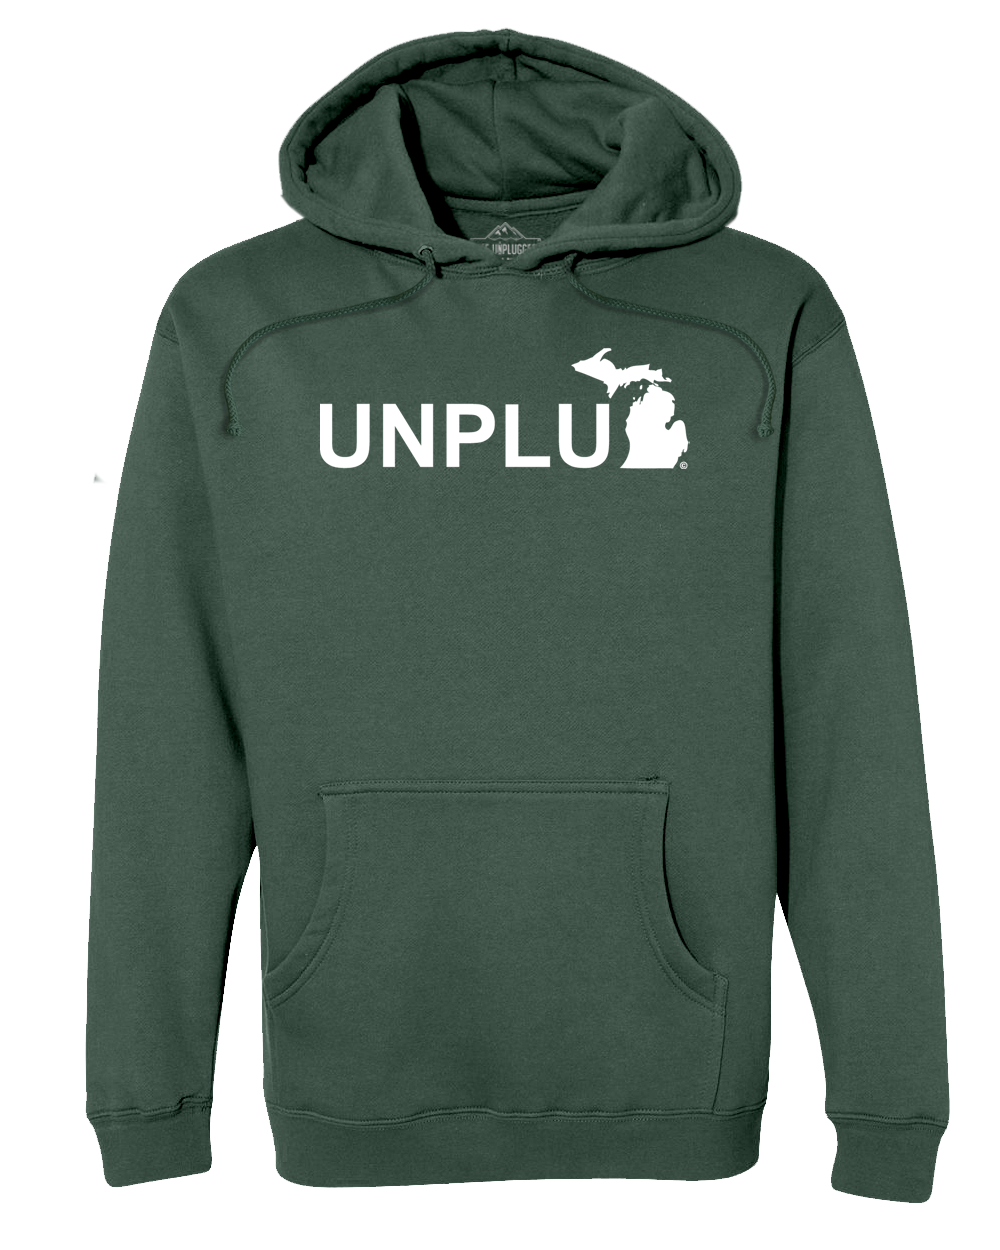 UNPLUG (MI) Premium Heavyweight Hooded Sweatshirt - Life Unplugged